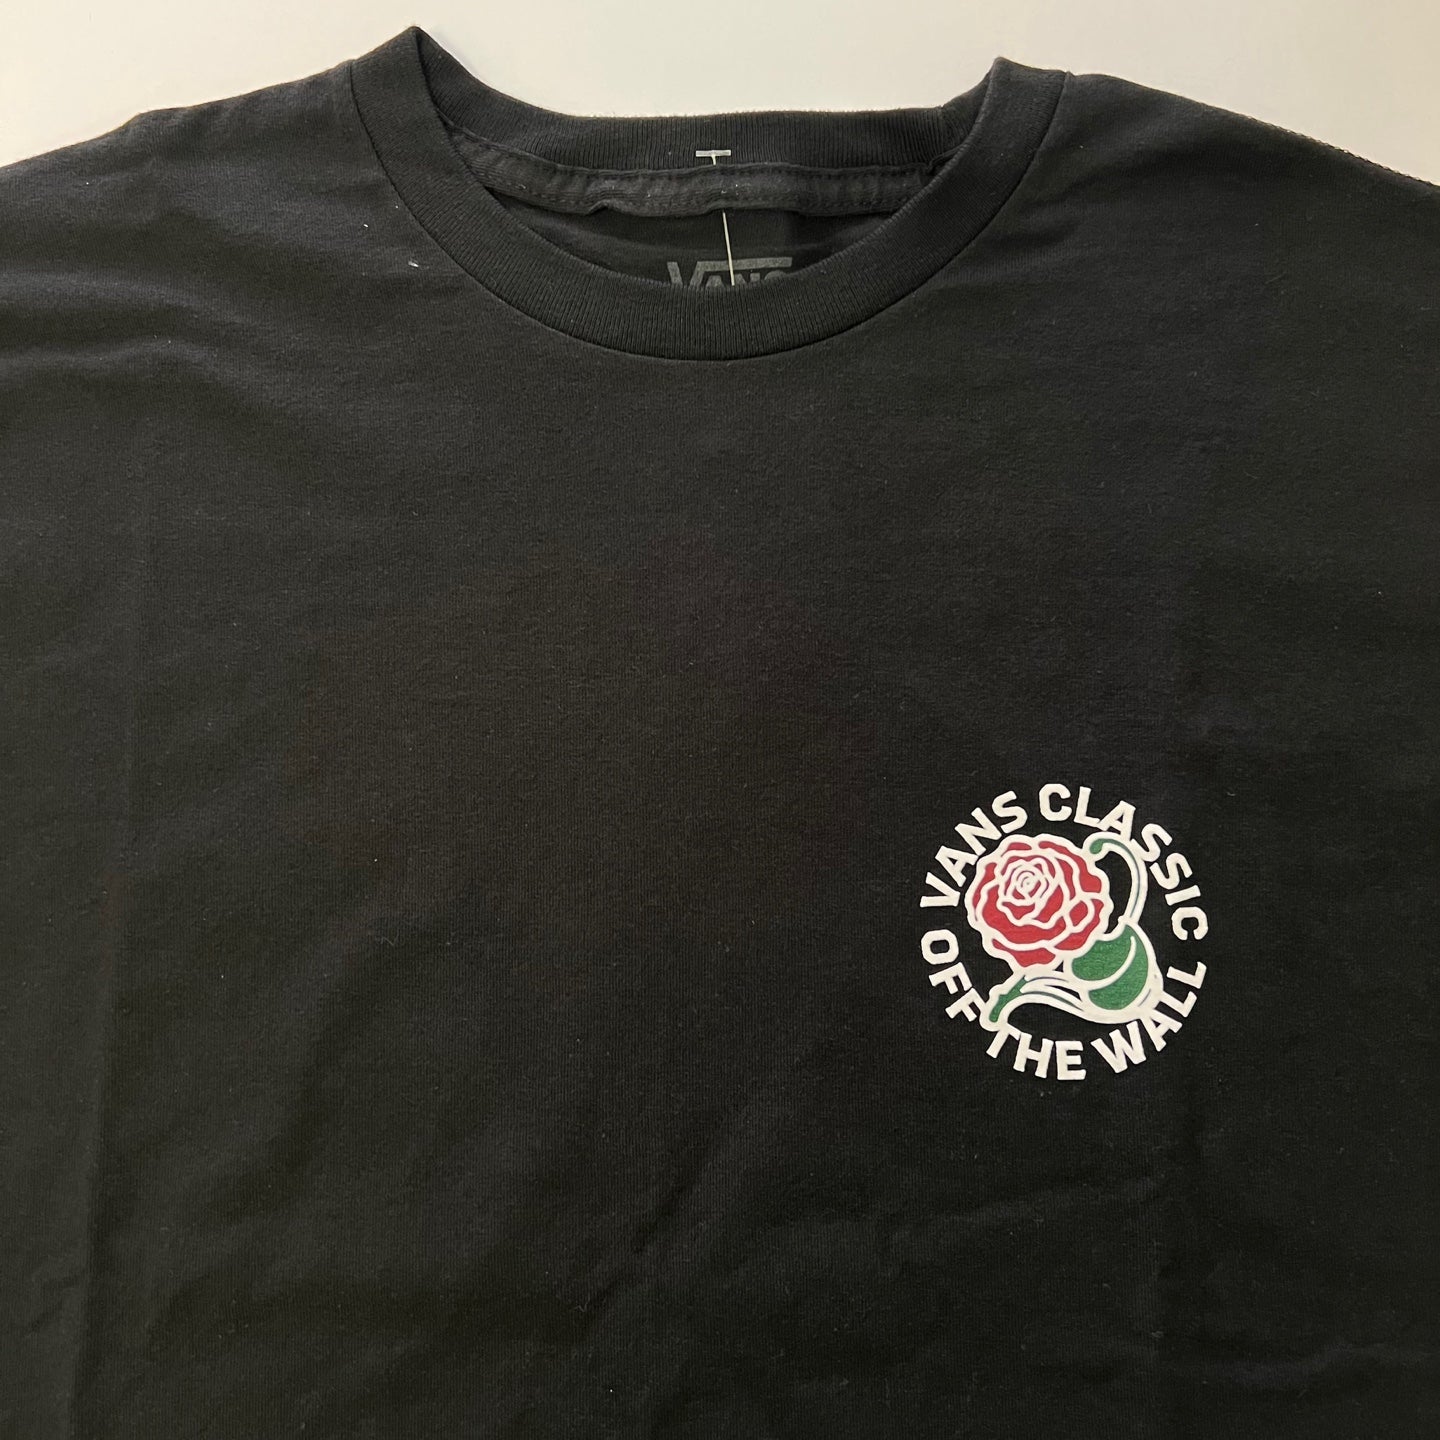 VANS Tried And True Rose T-Shirt